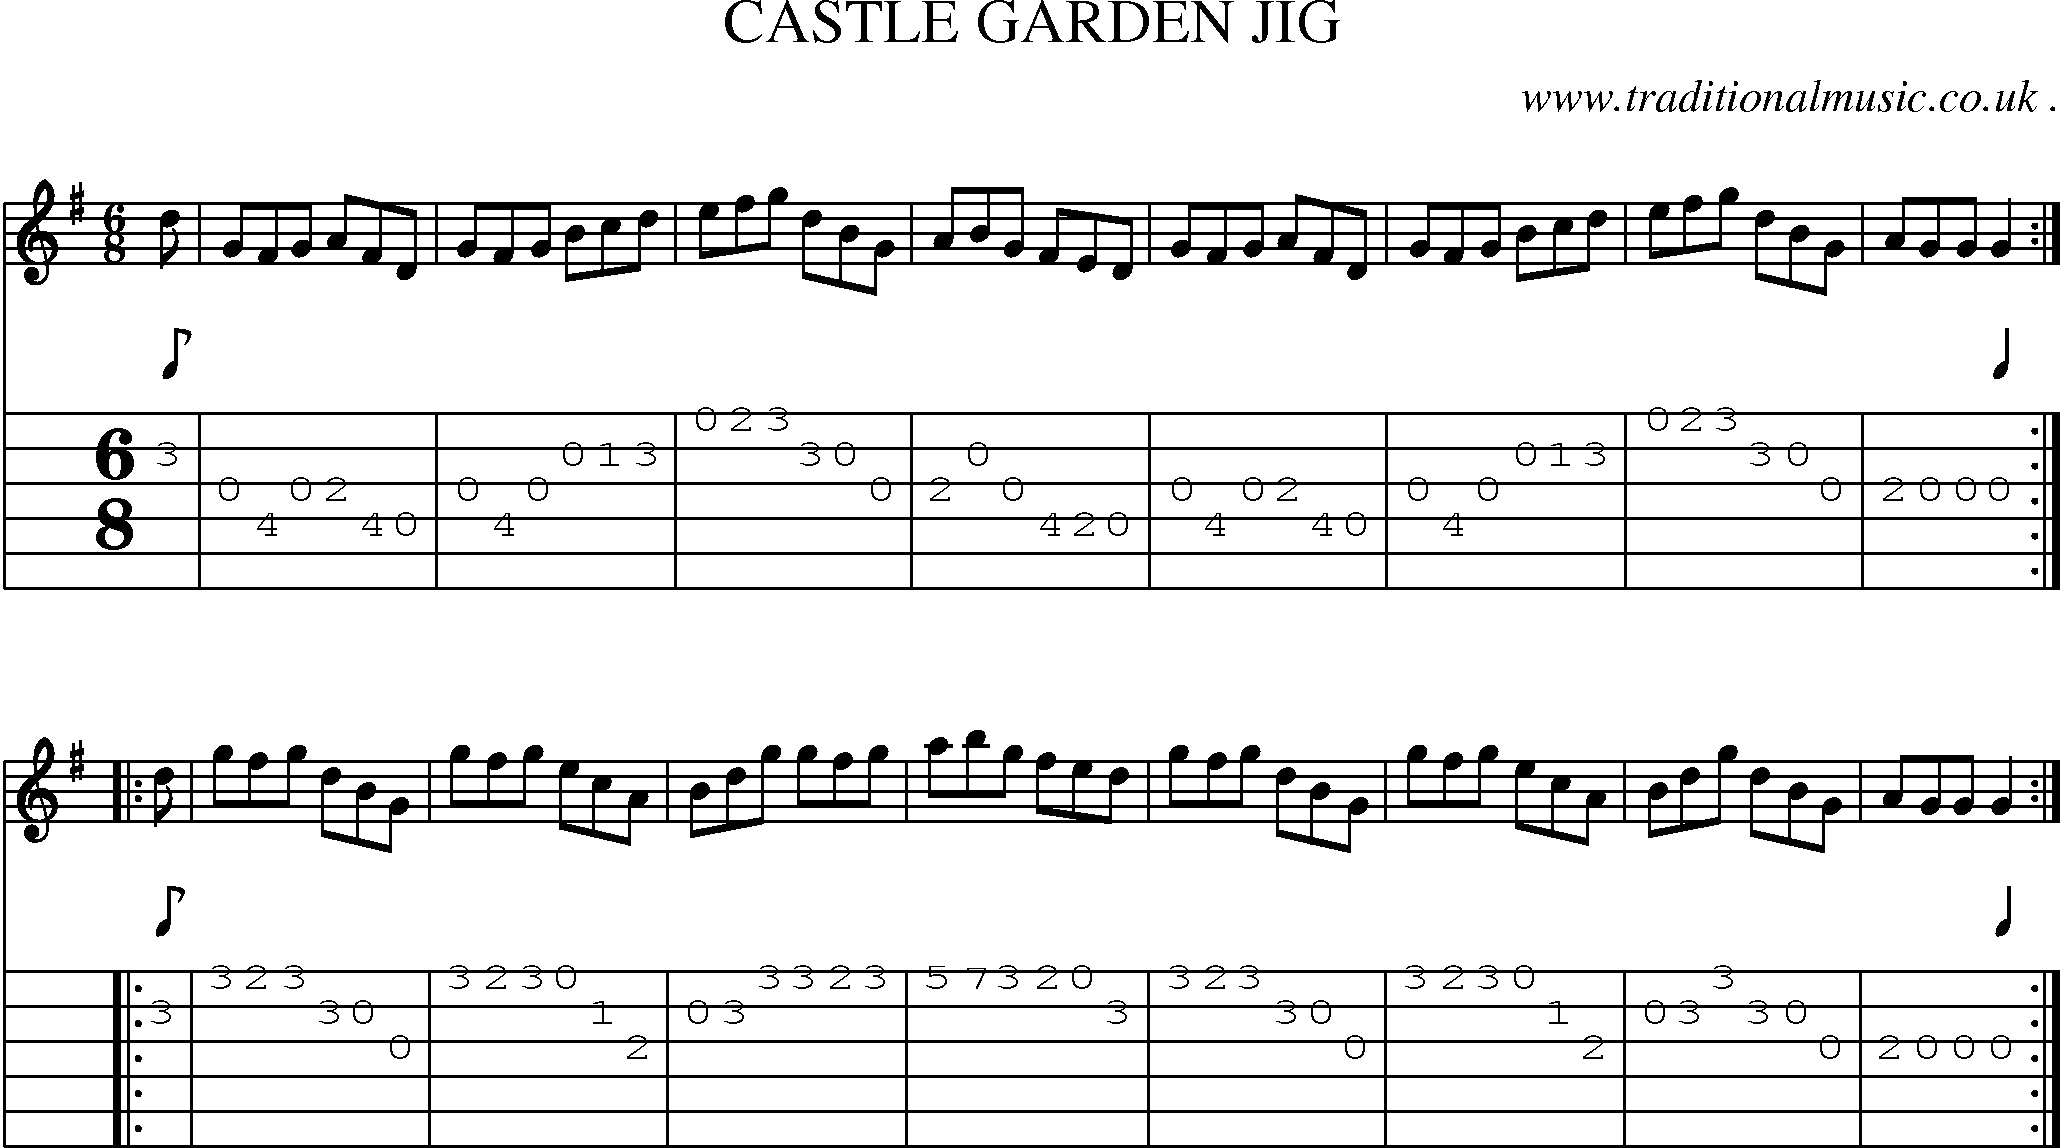 Sheet-Music and Guitar Tabs for Castle Garden Jig